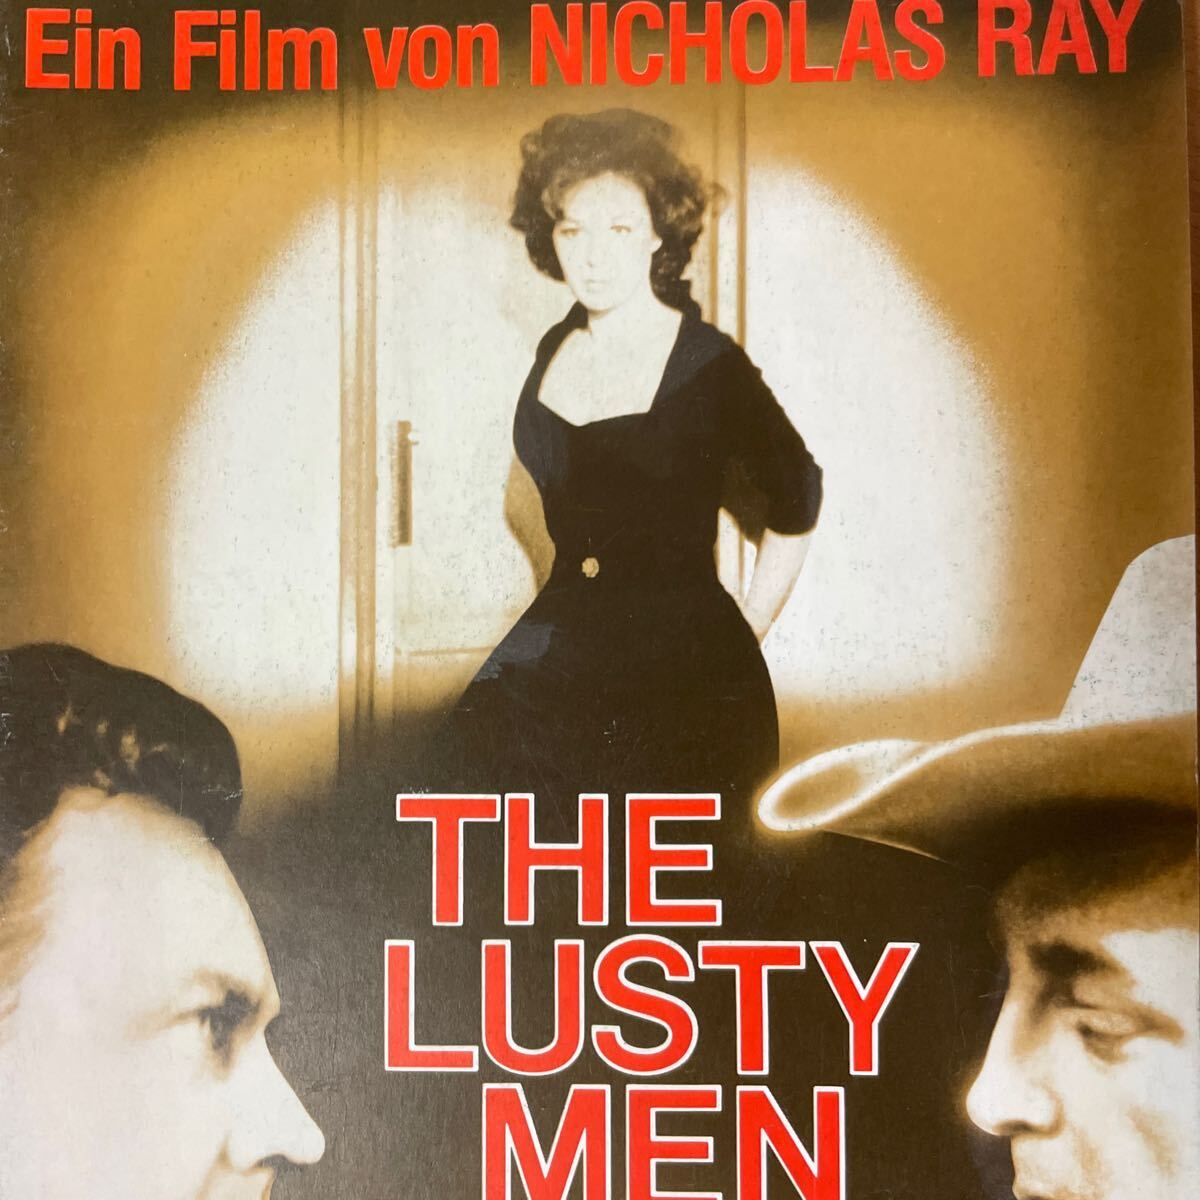  overseas edition pamphlet la stay * men /.. Rodeo Ein Film von NICHOLAS RAY THE LUSTY MEN SUSAN HAYWARD Susan partition word mi tea m